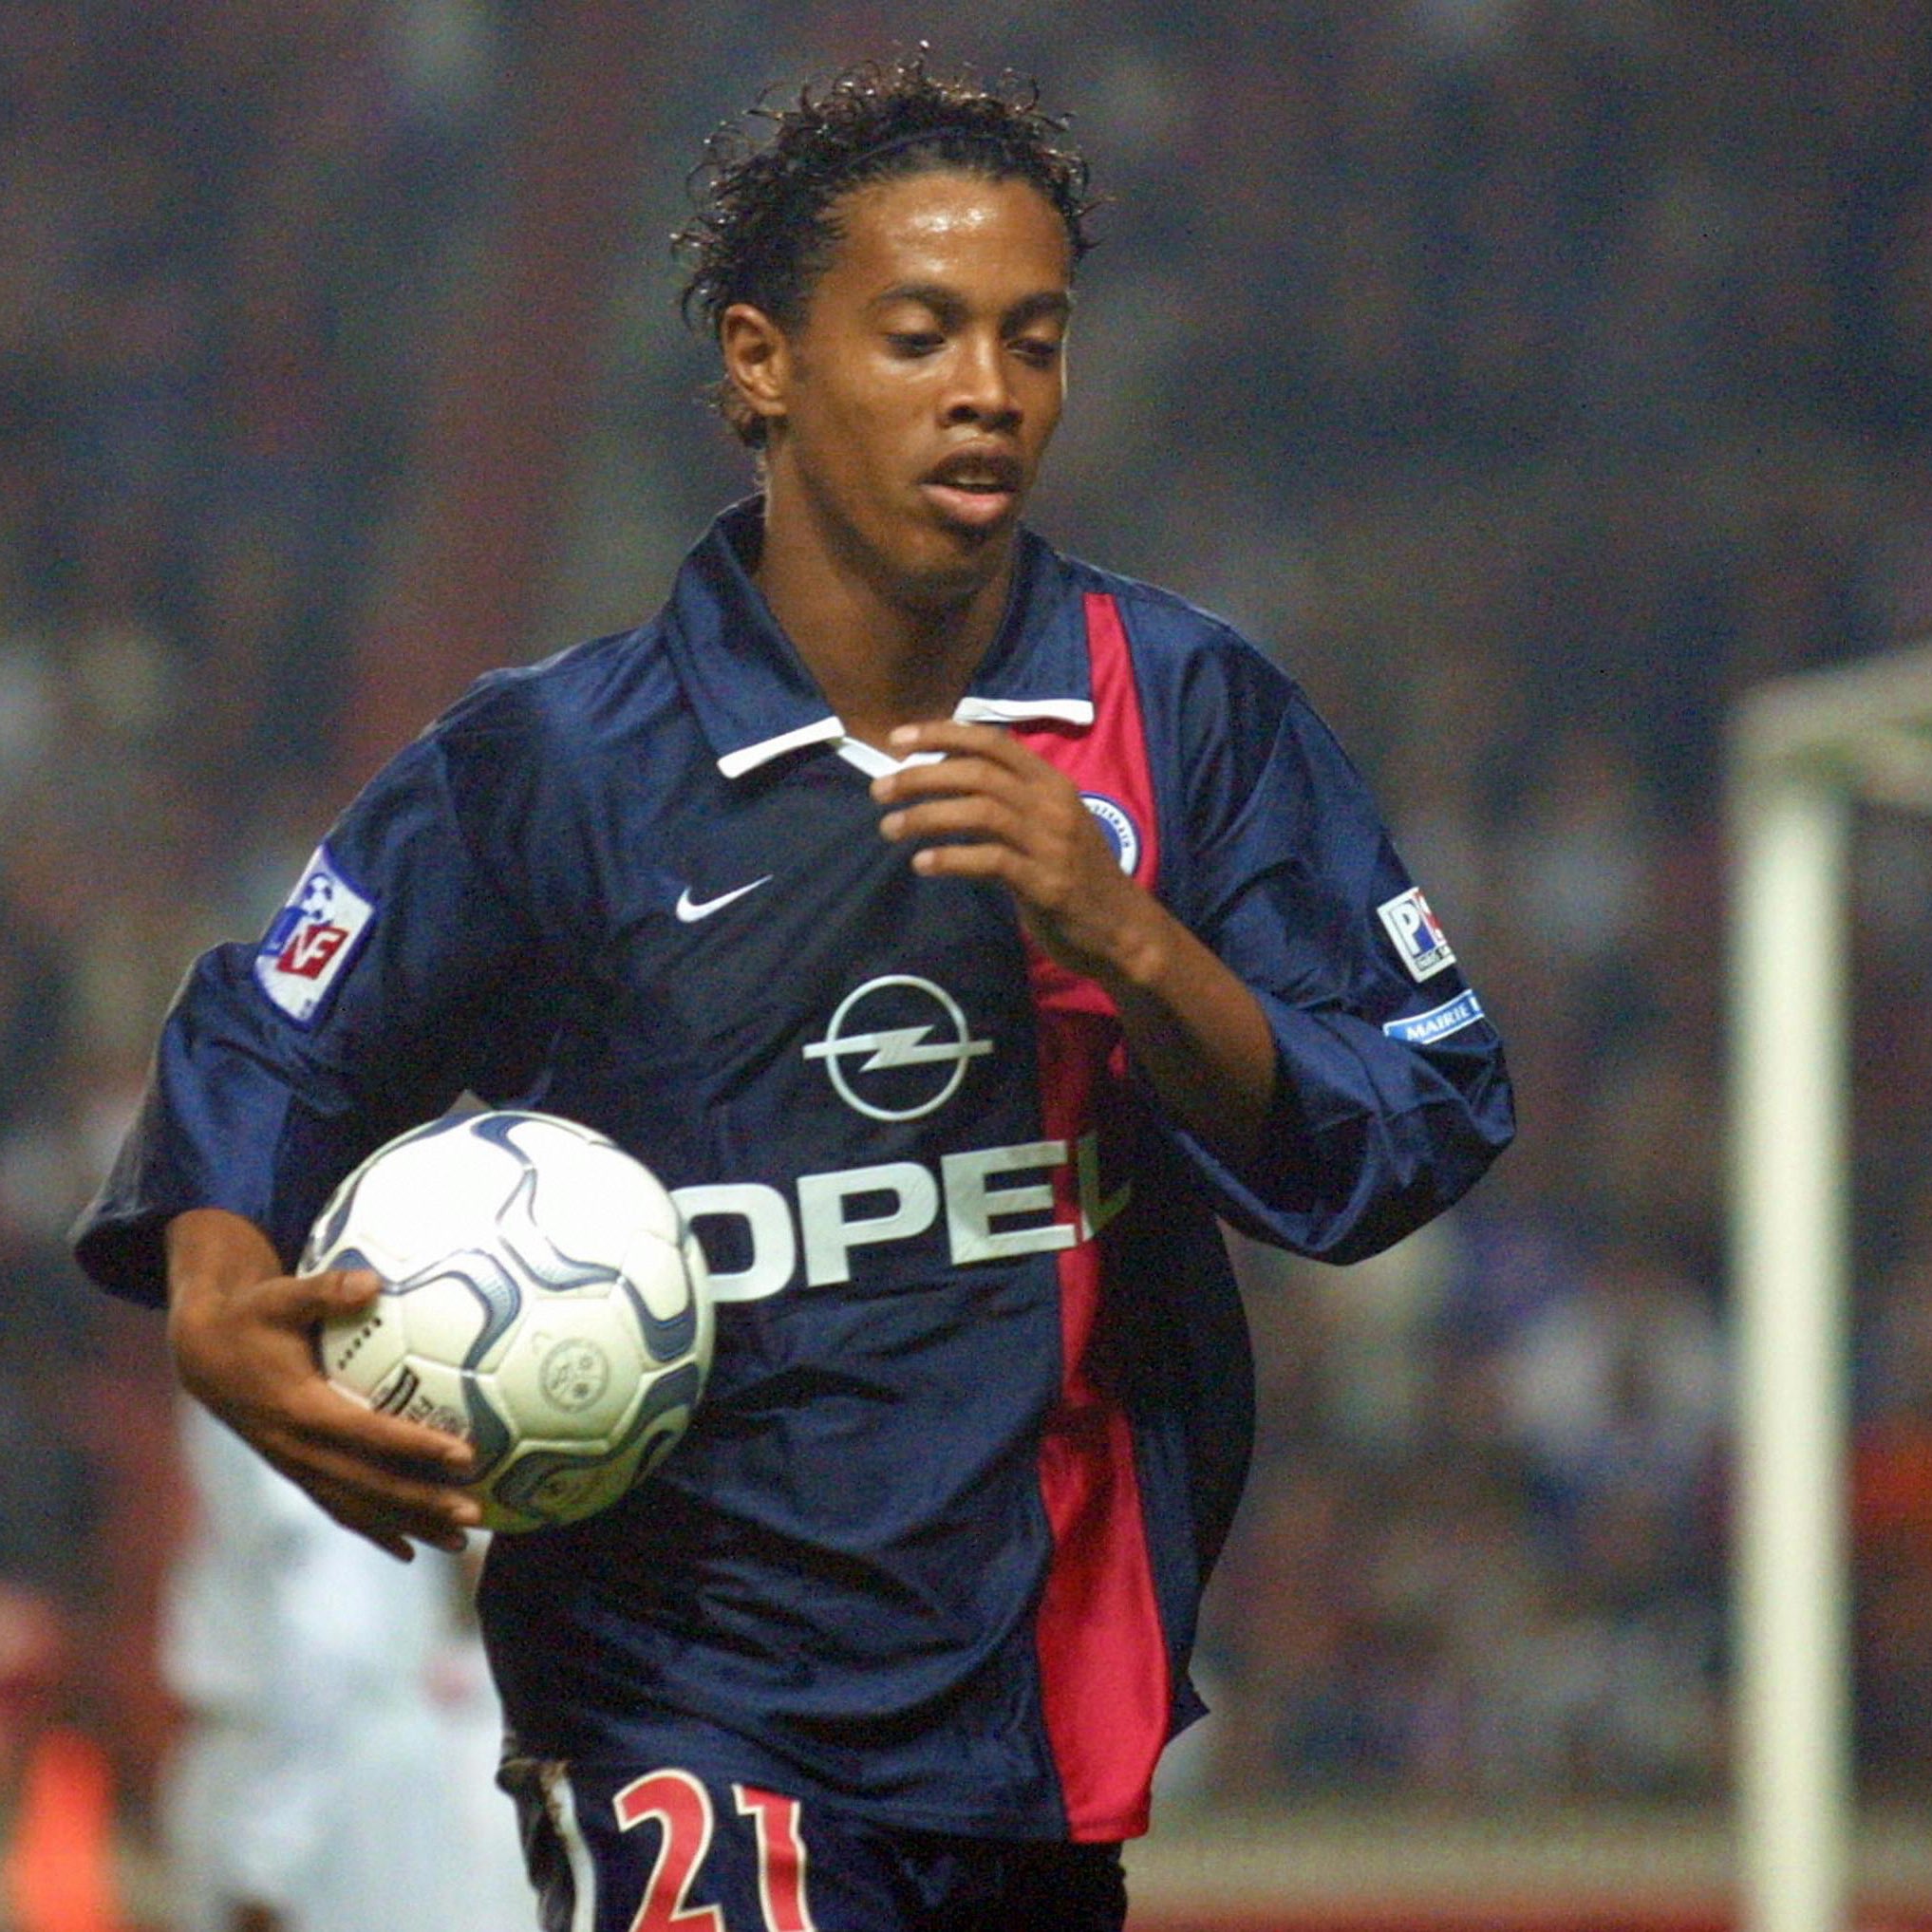 doe alstublieft niet Chirurgie exotisch Cult Kits on X: "PSG Ronaldinho 2001/02 home shirt by @Nike  https://t.co/59hev1LnZe https://t.co/SztgdiKhUM" / X